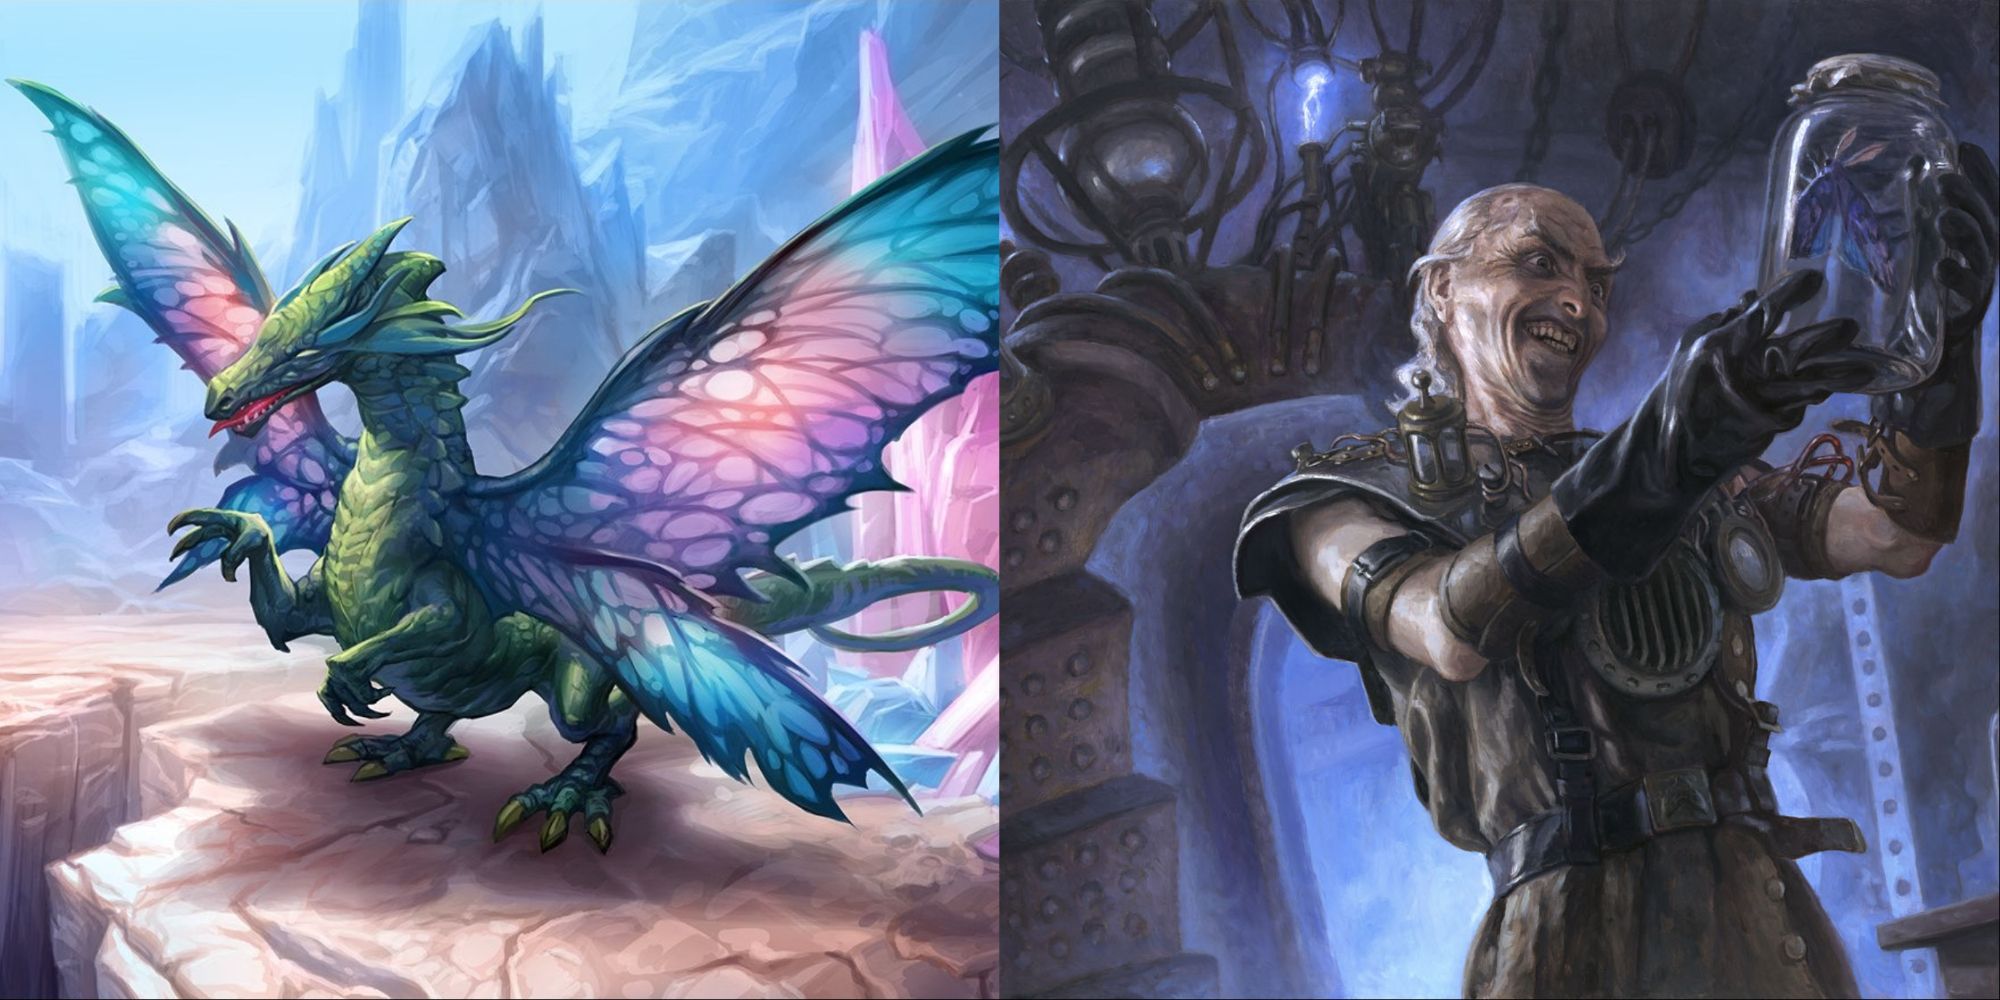 Sprite Dragon and Delver Of Secrets artwork in Magic: The Gathering.